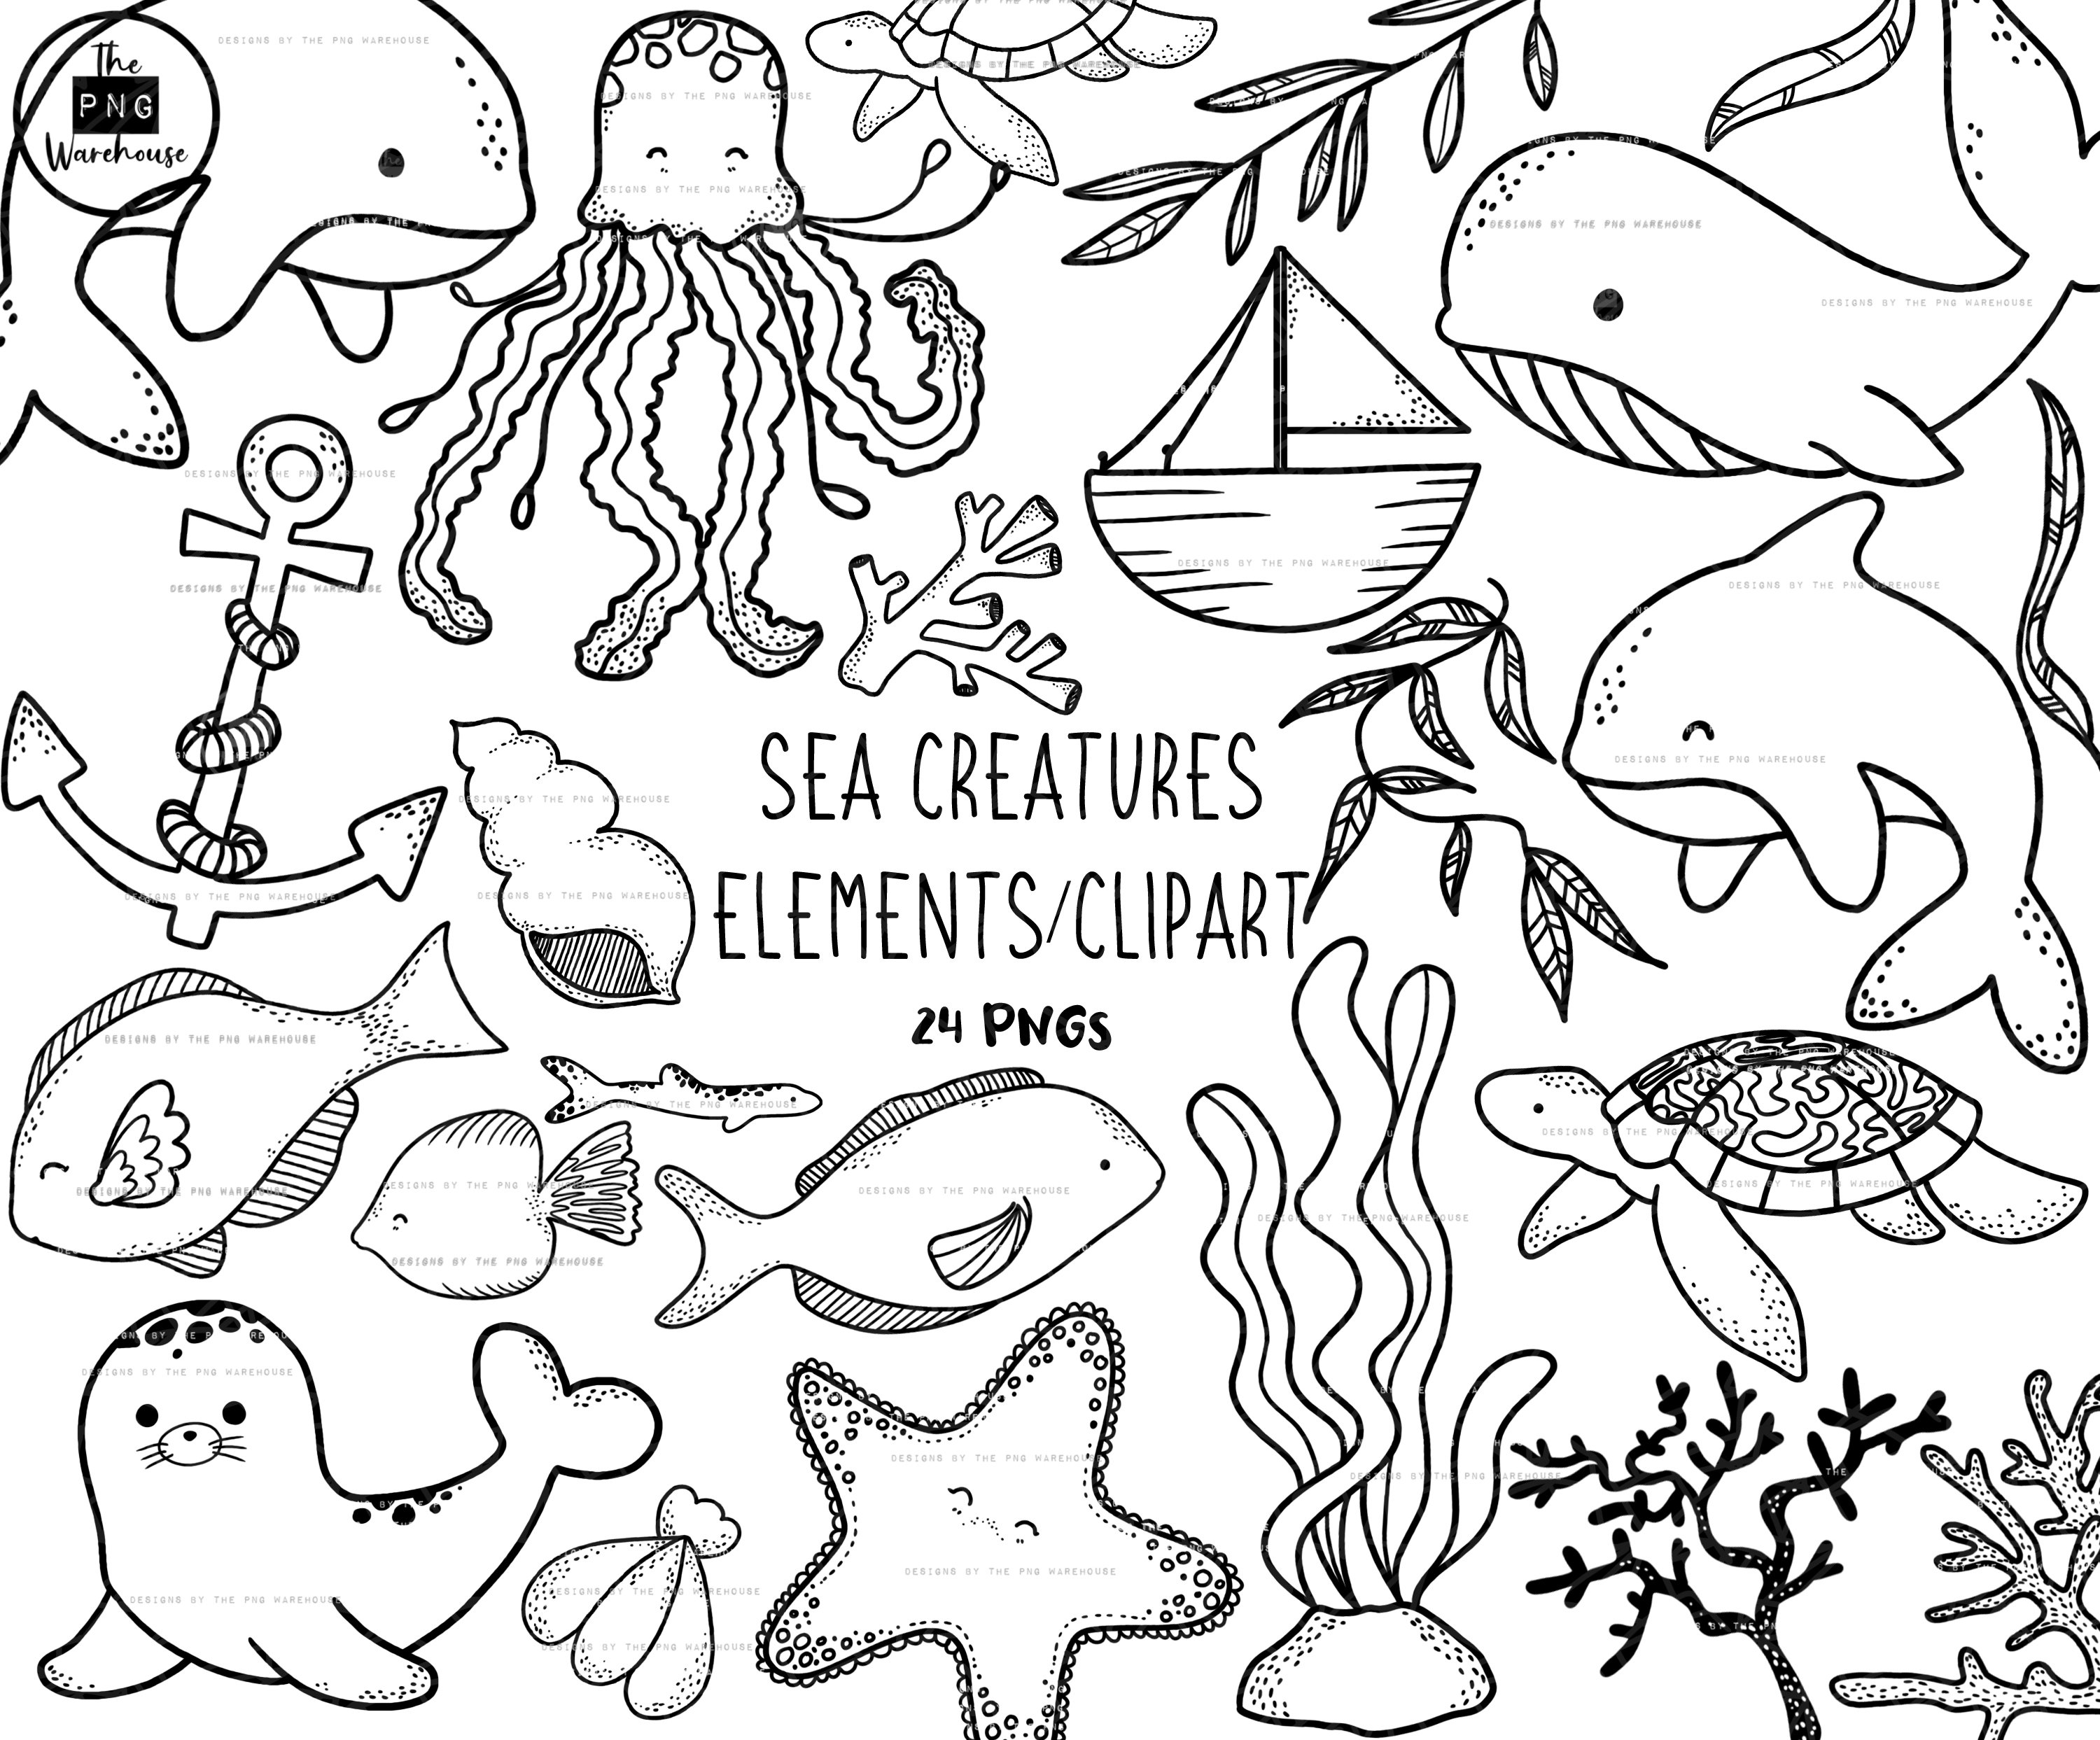 SEA CREATURES Lineart Elements 24 Png Clip Art Designs Instant Download 300  Dpi Line Art Non Filled Hand Drawn Elements Doodles Black -  Australia